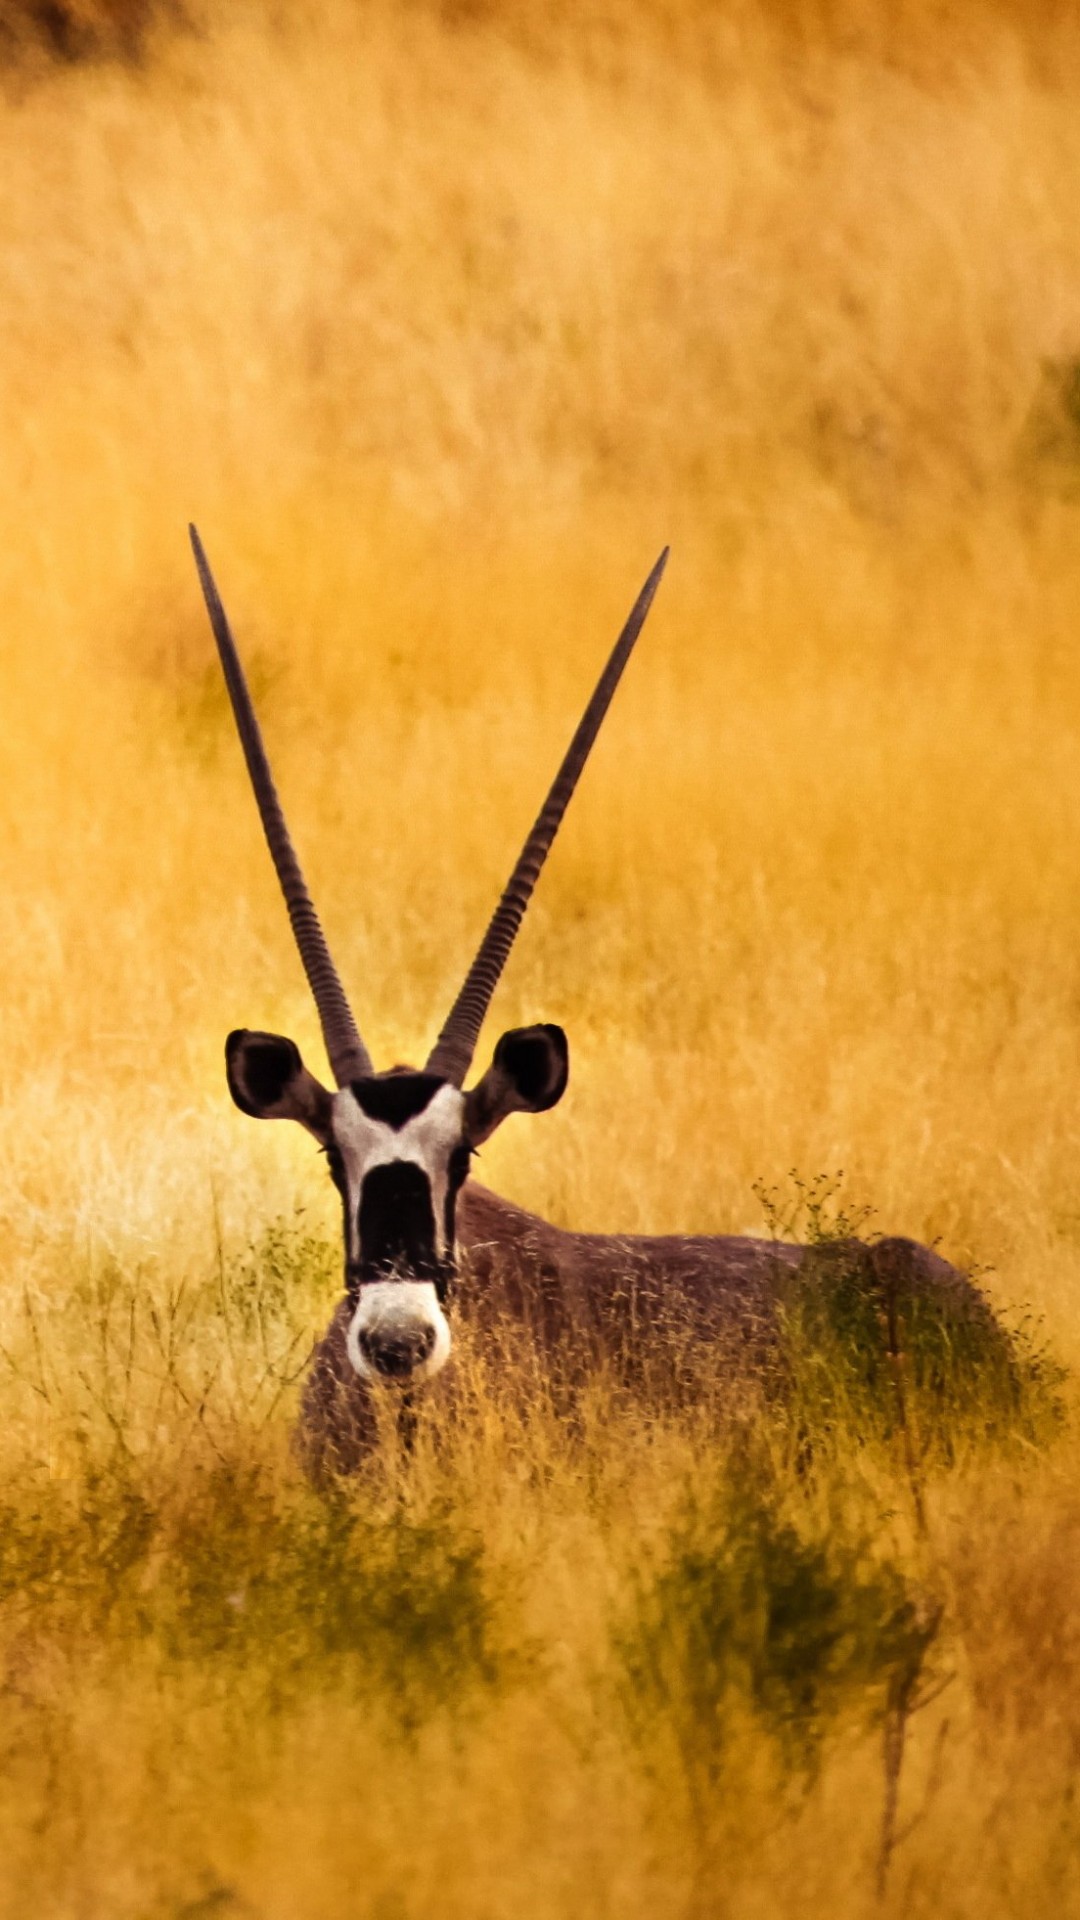 Antelope In The Savanna Wallpaper for Google Nexus 5